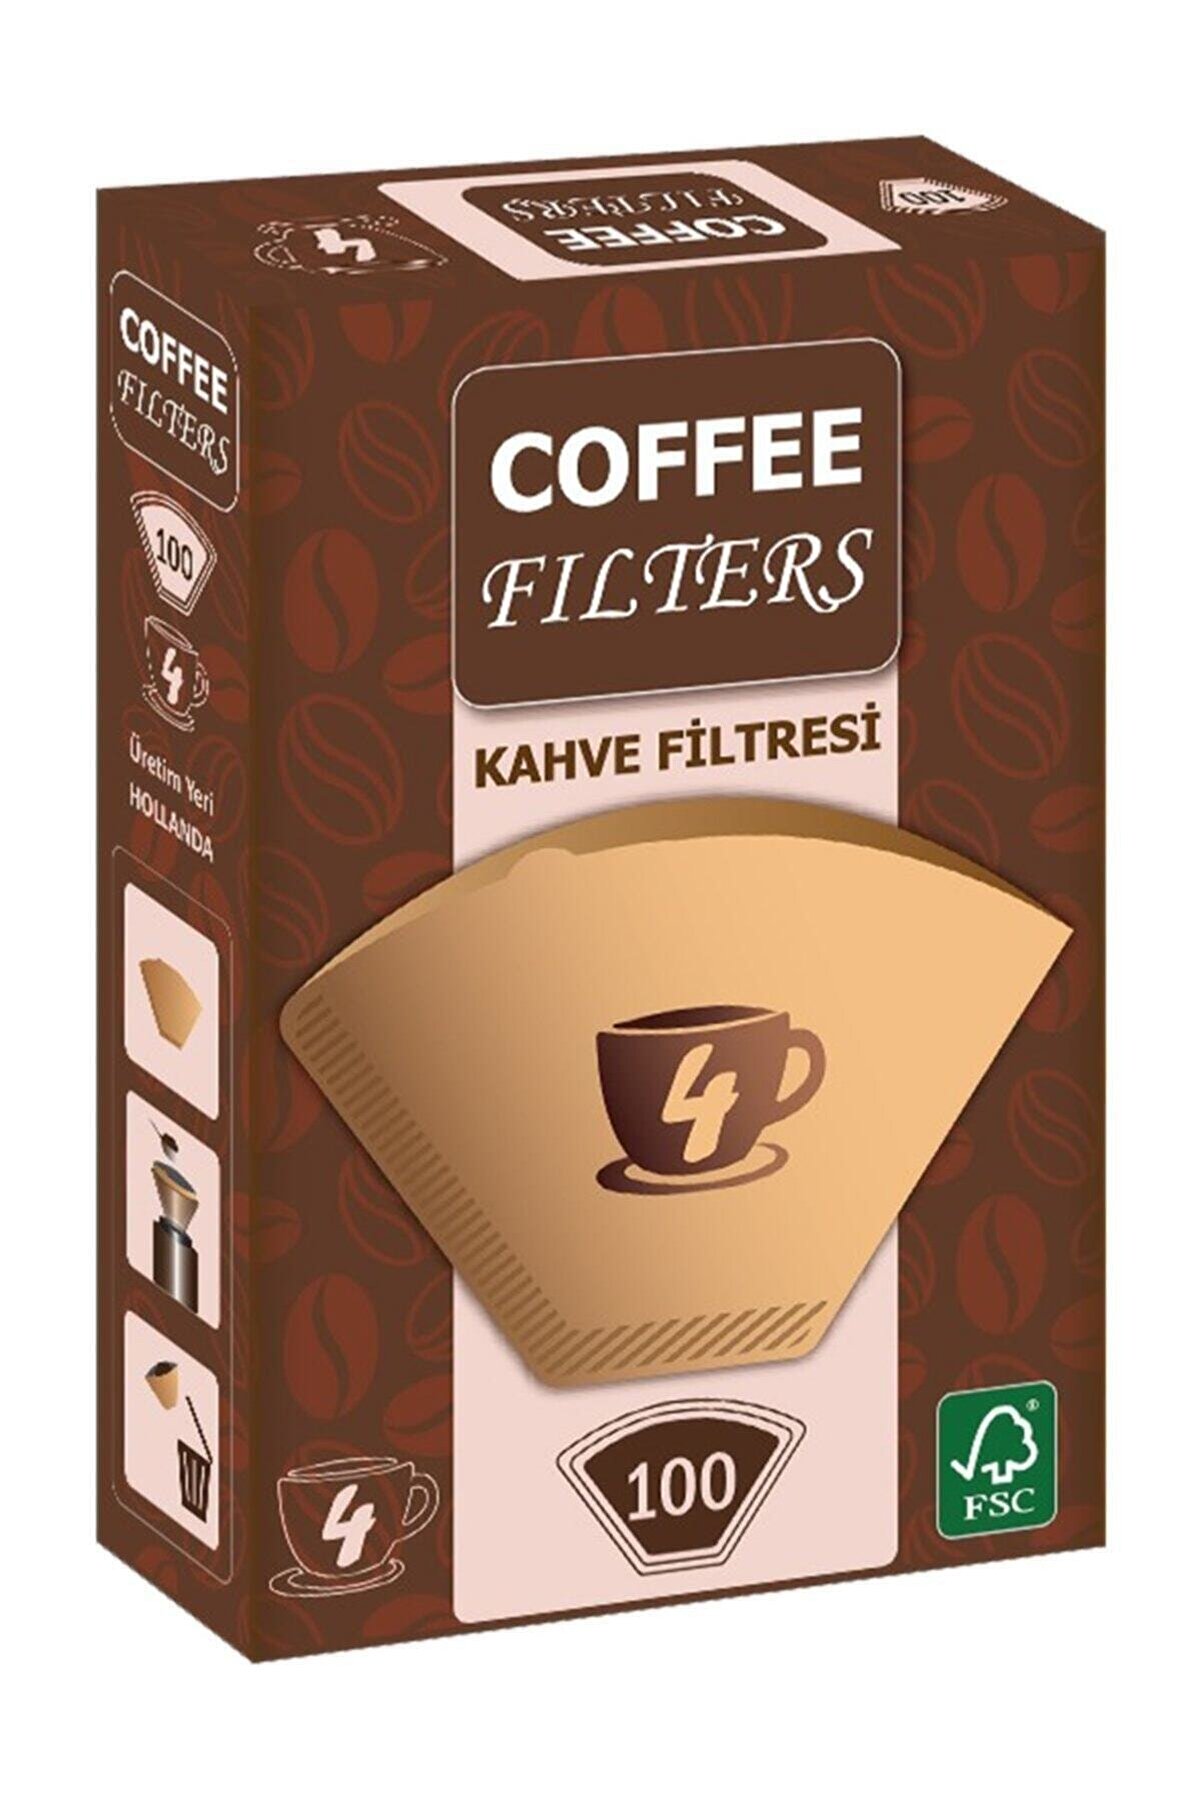 Universal Coffee Filters Filtre Kahve Kağıdı 1/4 4 Numara 100'lü Paket